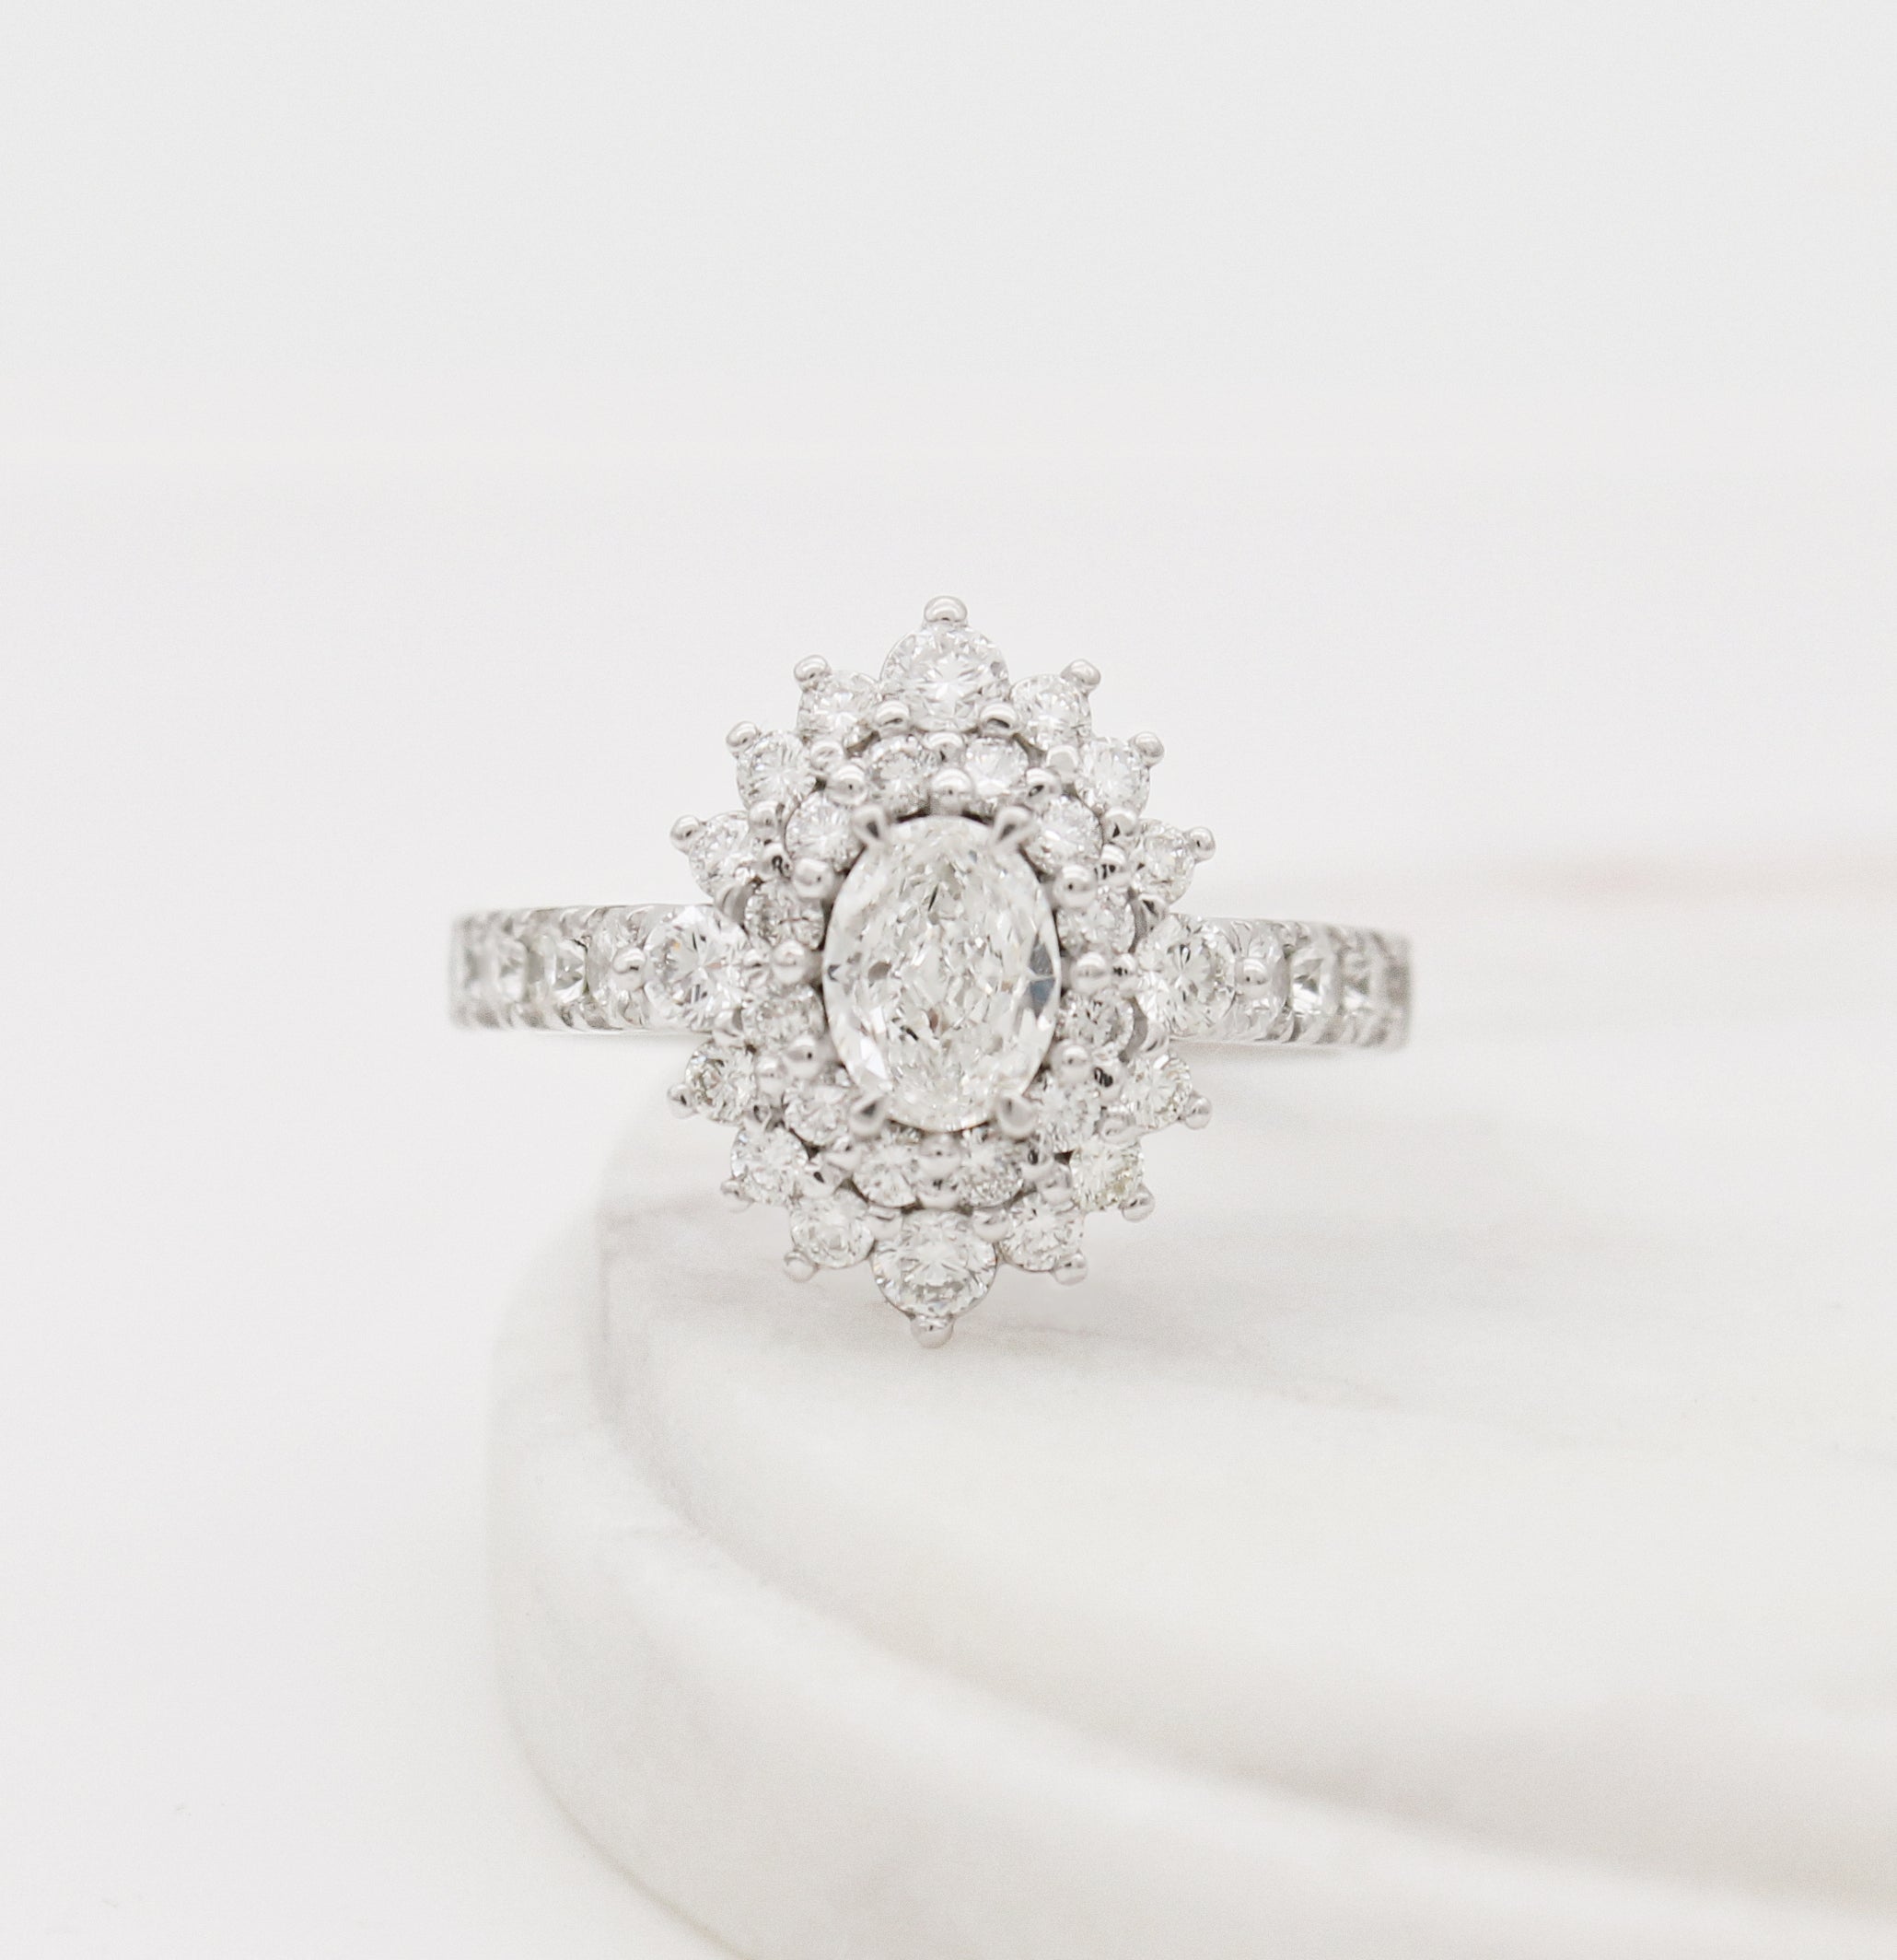 Double halo engagement ring platinum diamonds cluster